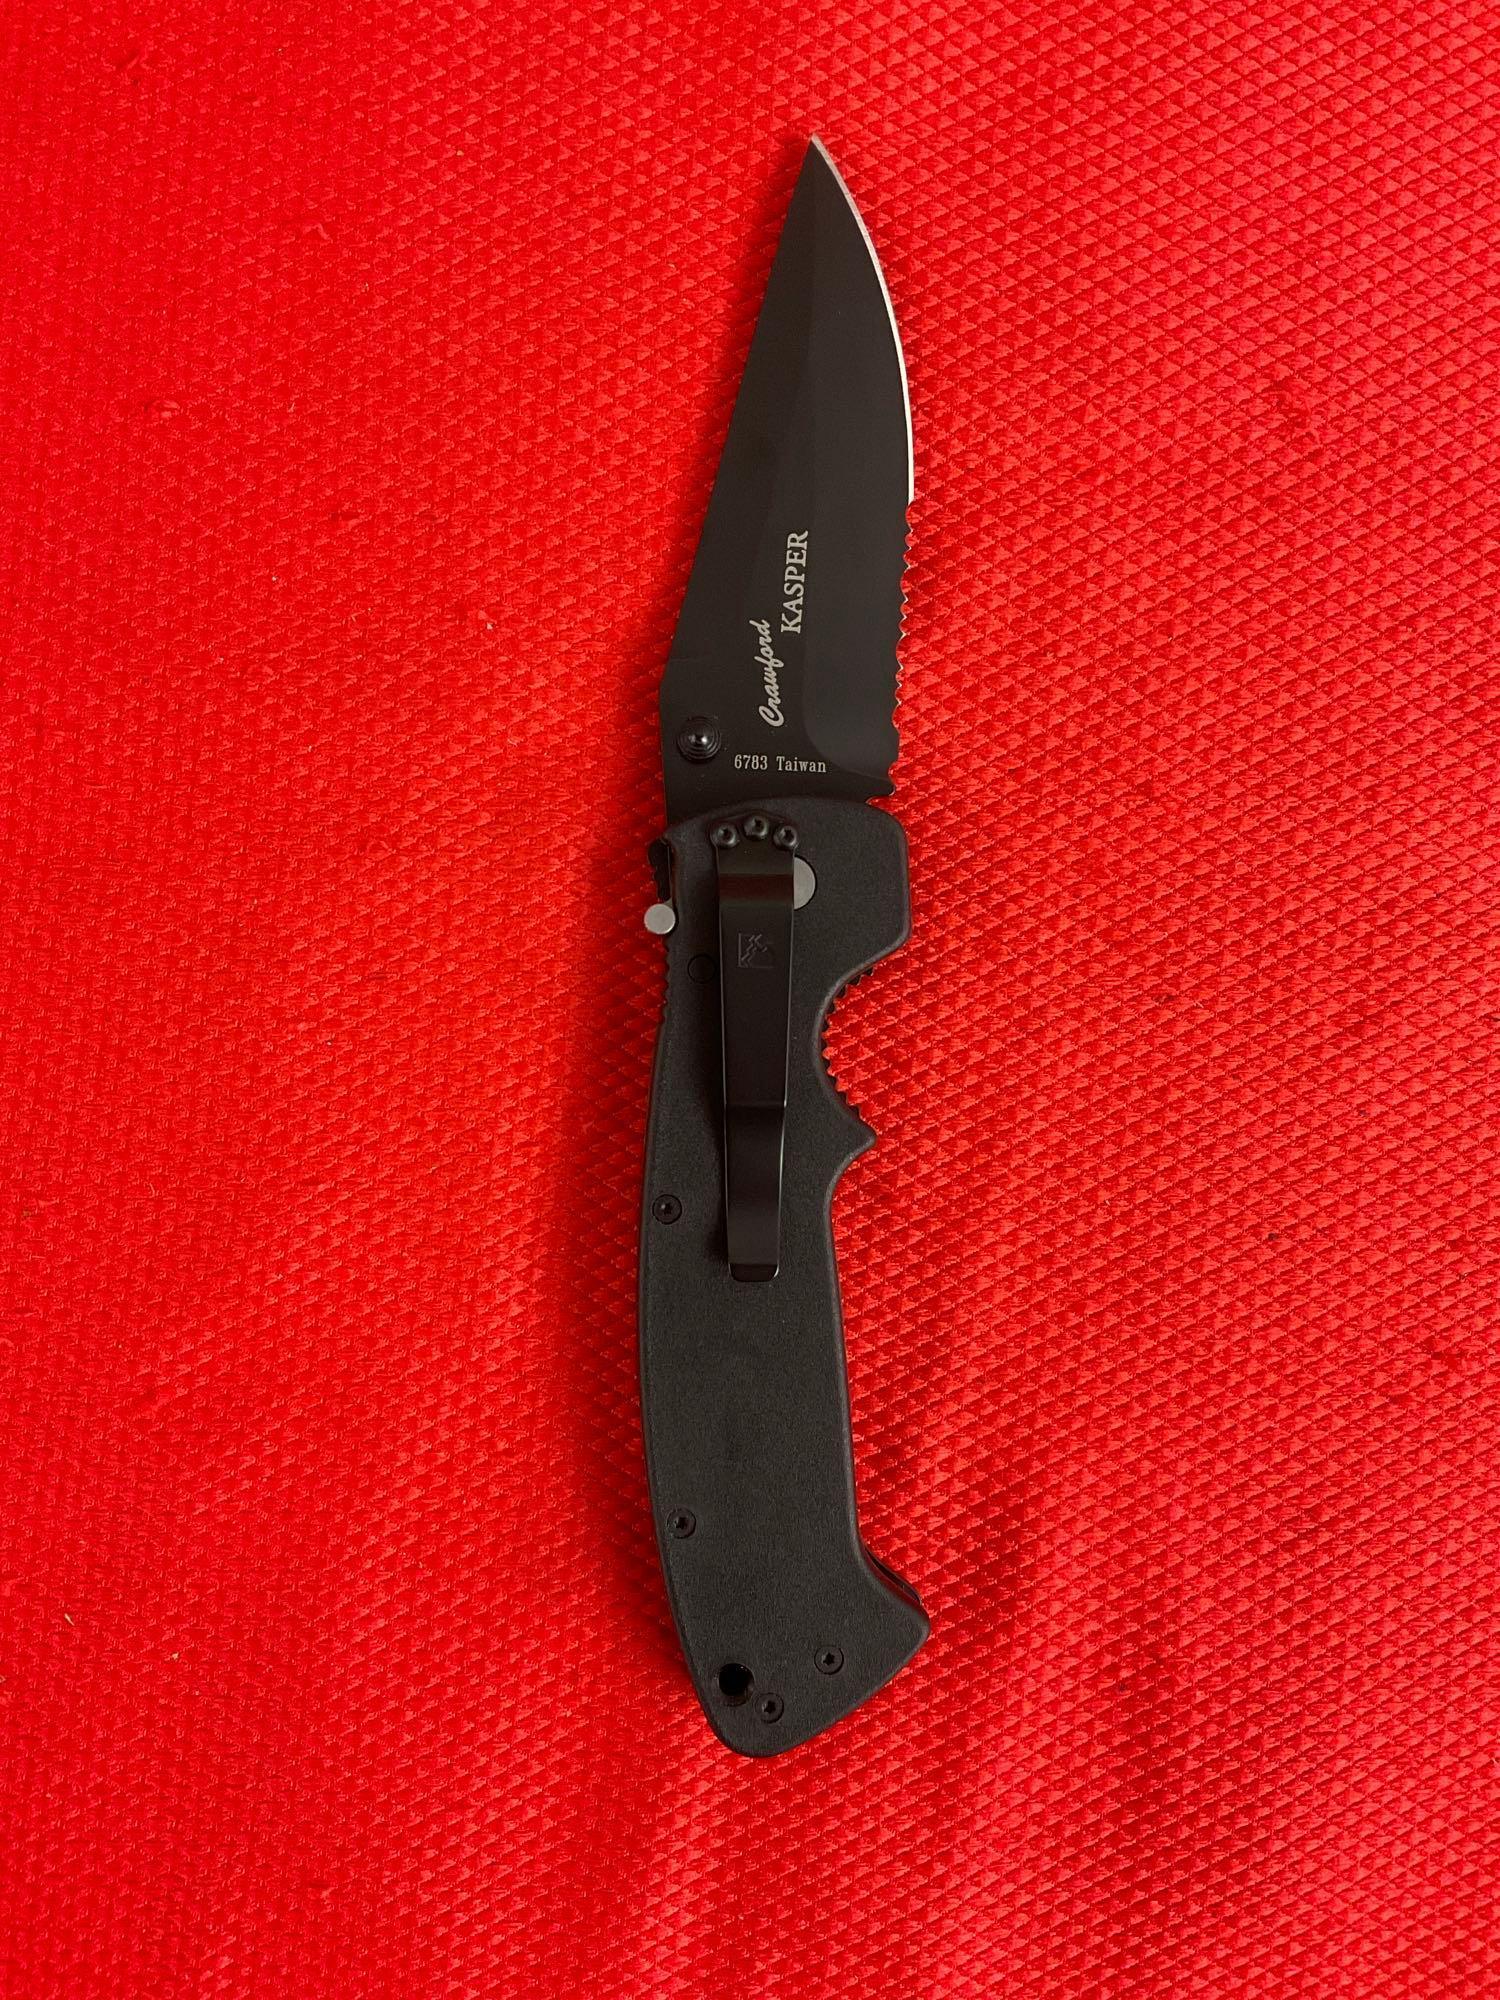 CRKT Crawford Kasper 4" Stainless Steel Folding Blade Tactical Knife Model 6783K w/ NRA Logo. NIB.